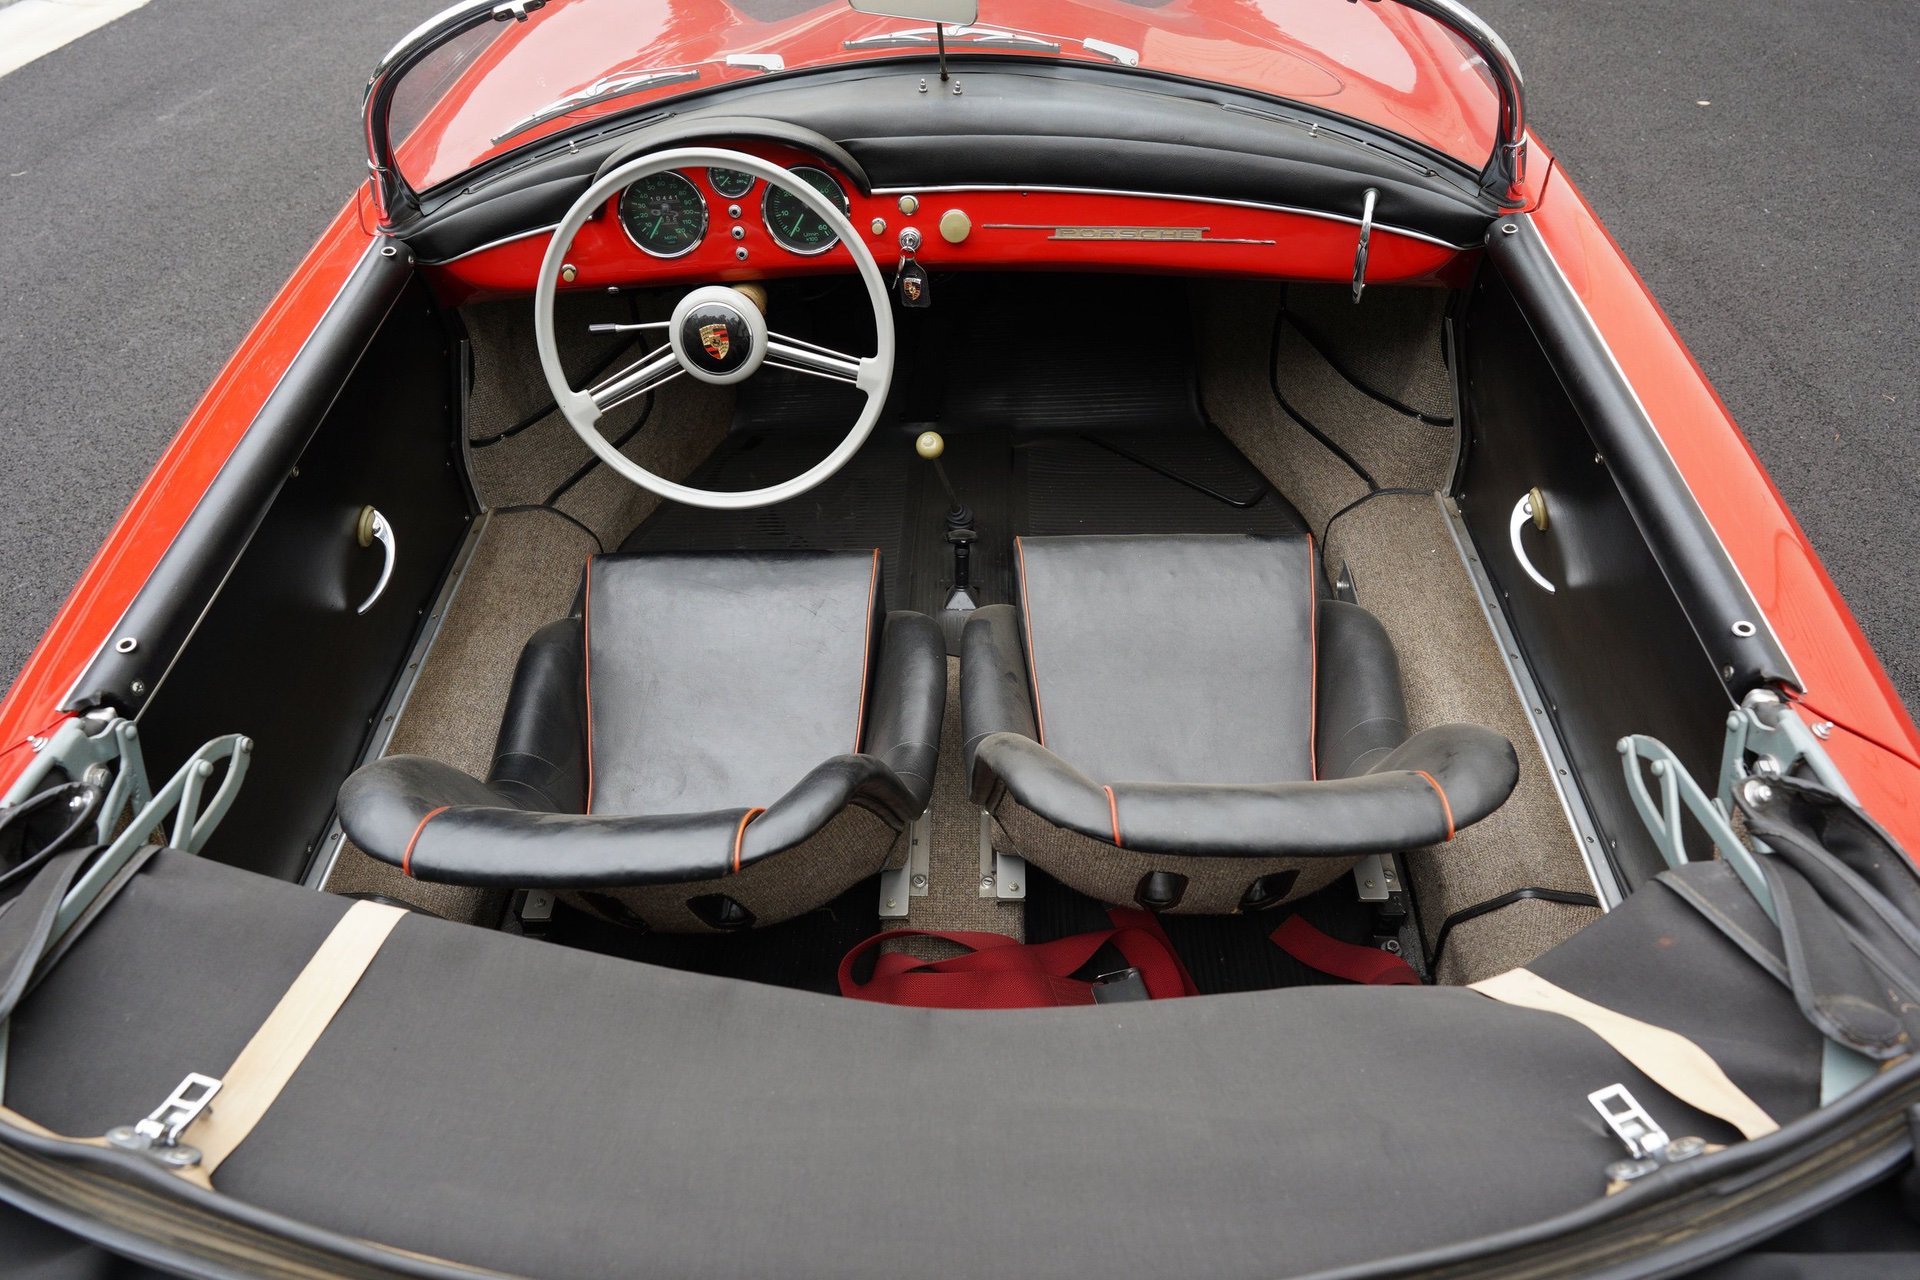 The bare cockpit of a 356A Speedster